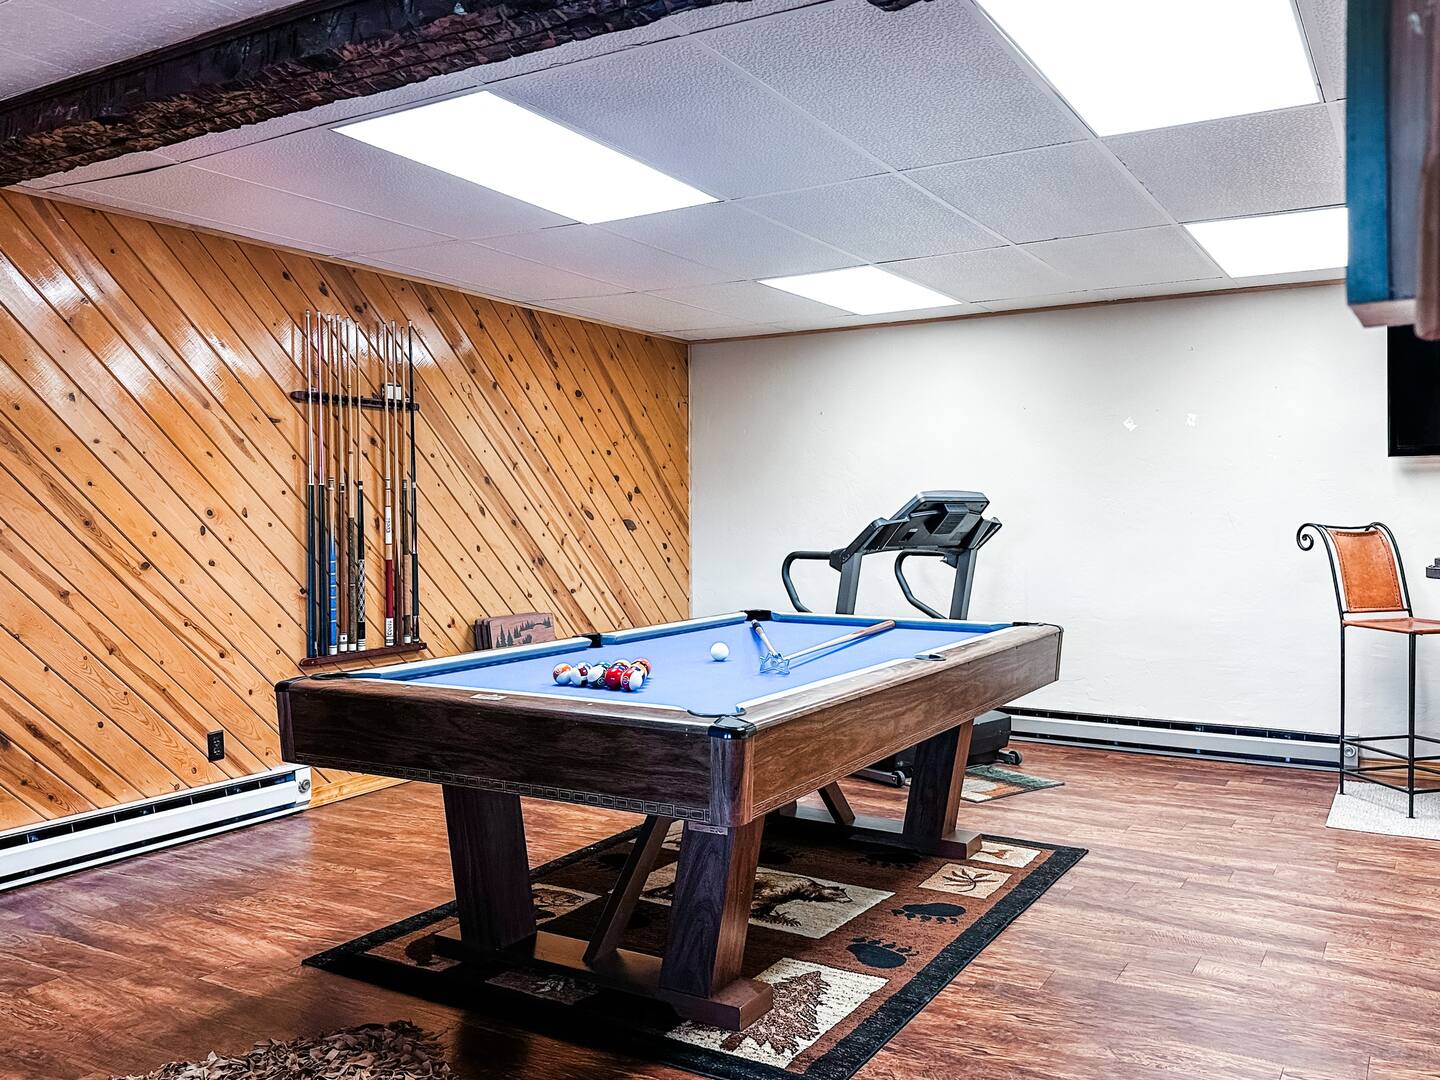 billiards room in a basement